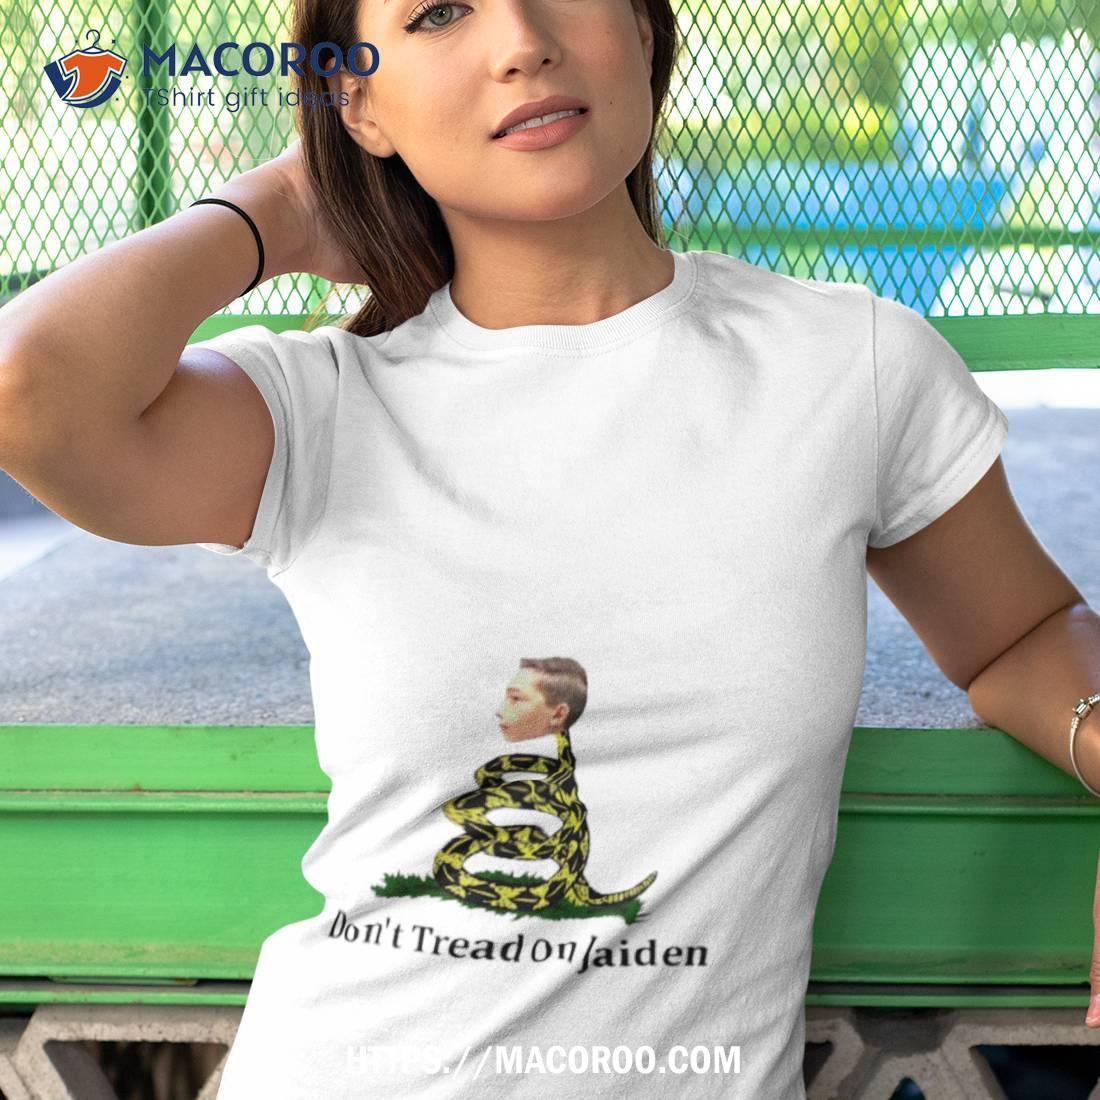 Jaiden Animations T-shirt Jaiden Animations Classic T-shirt